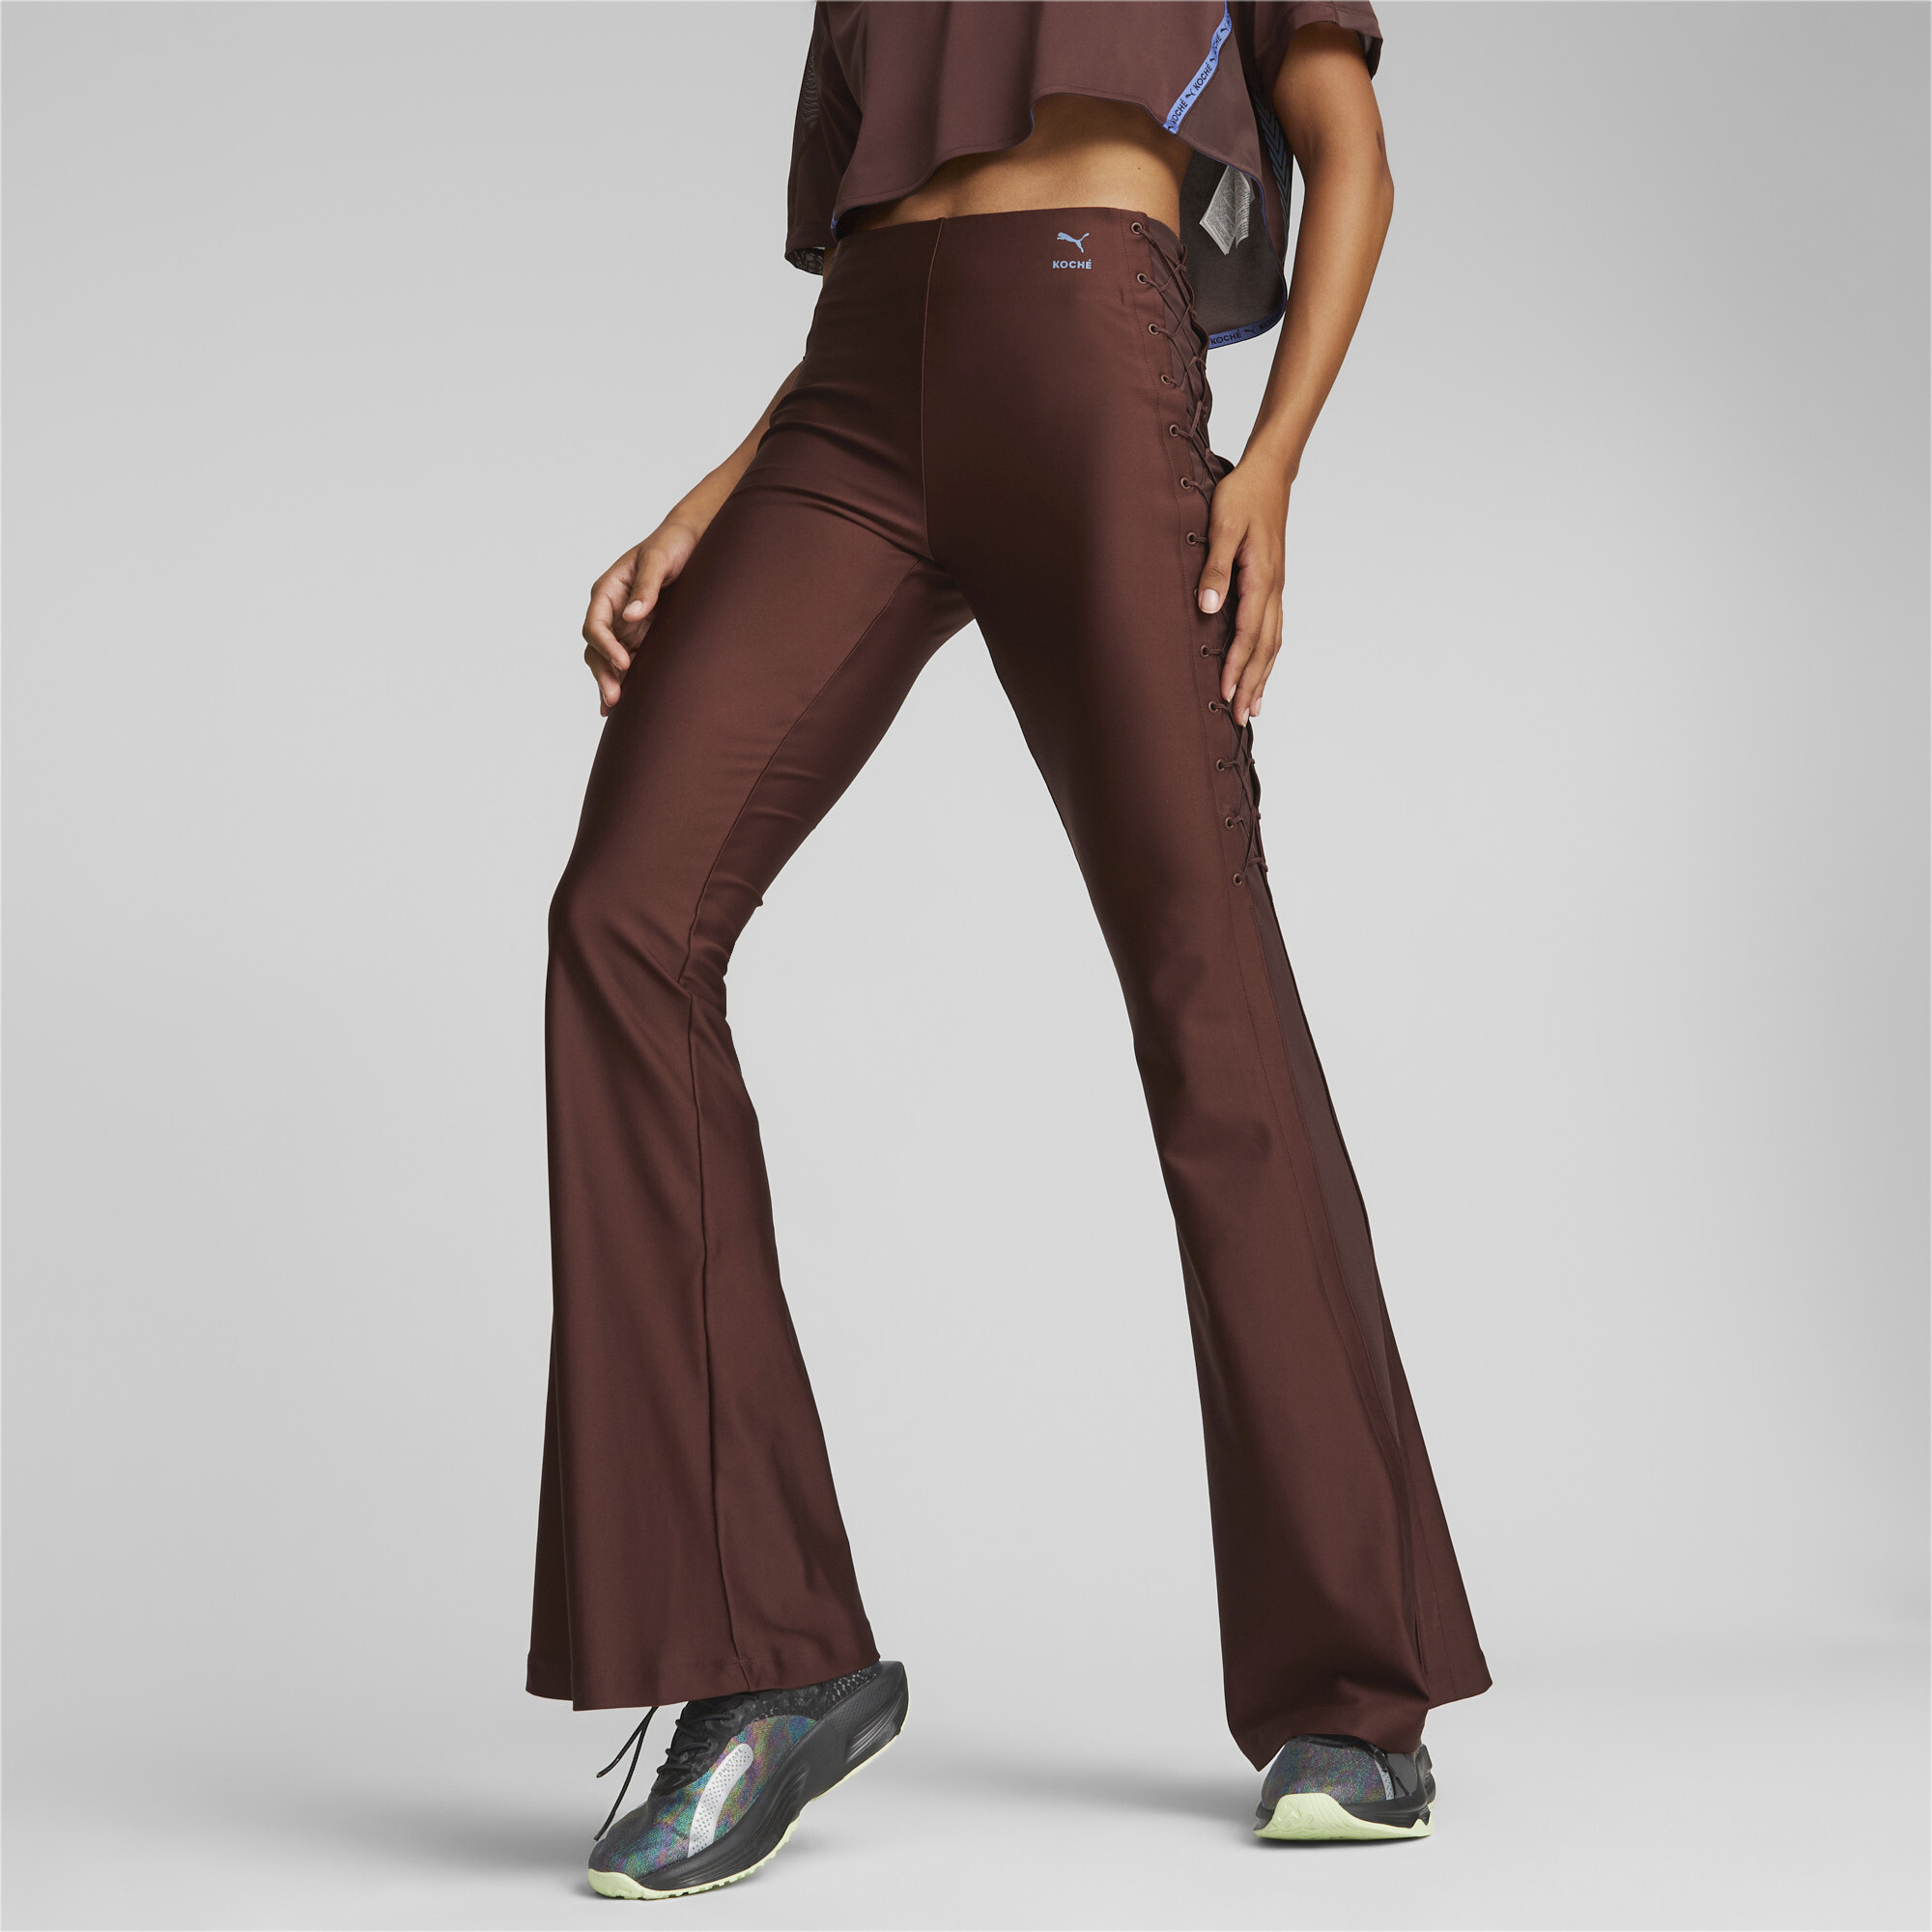 Women's PUMA X KOCHÃ Slim Fit Pants Women In Brown, Size Medium